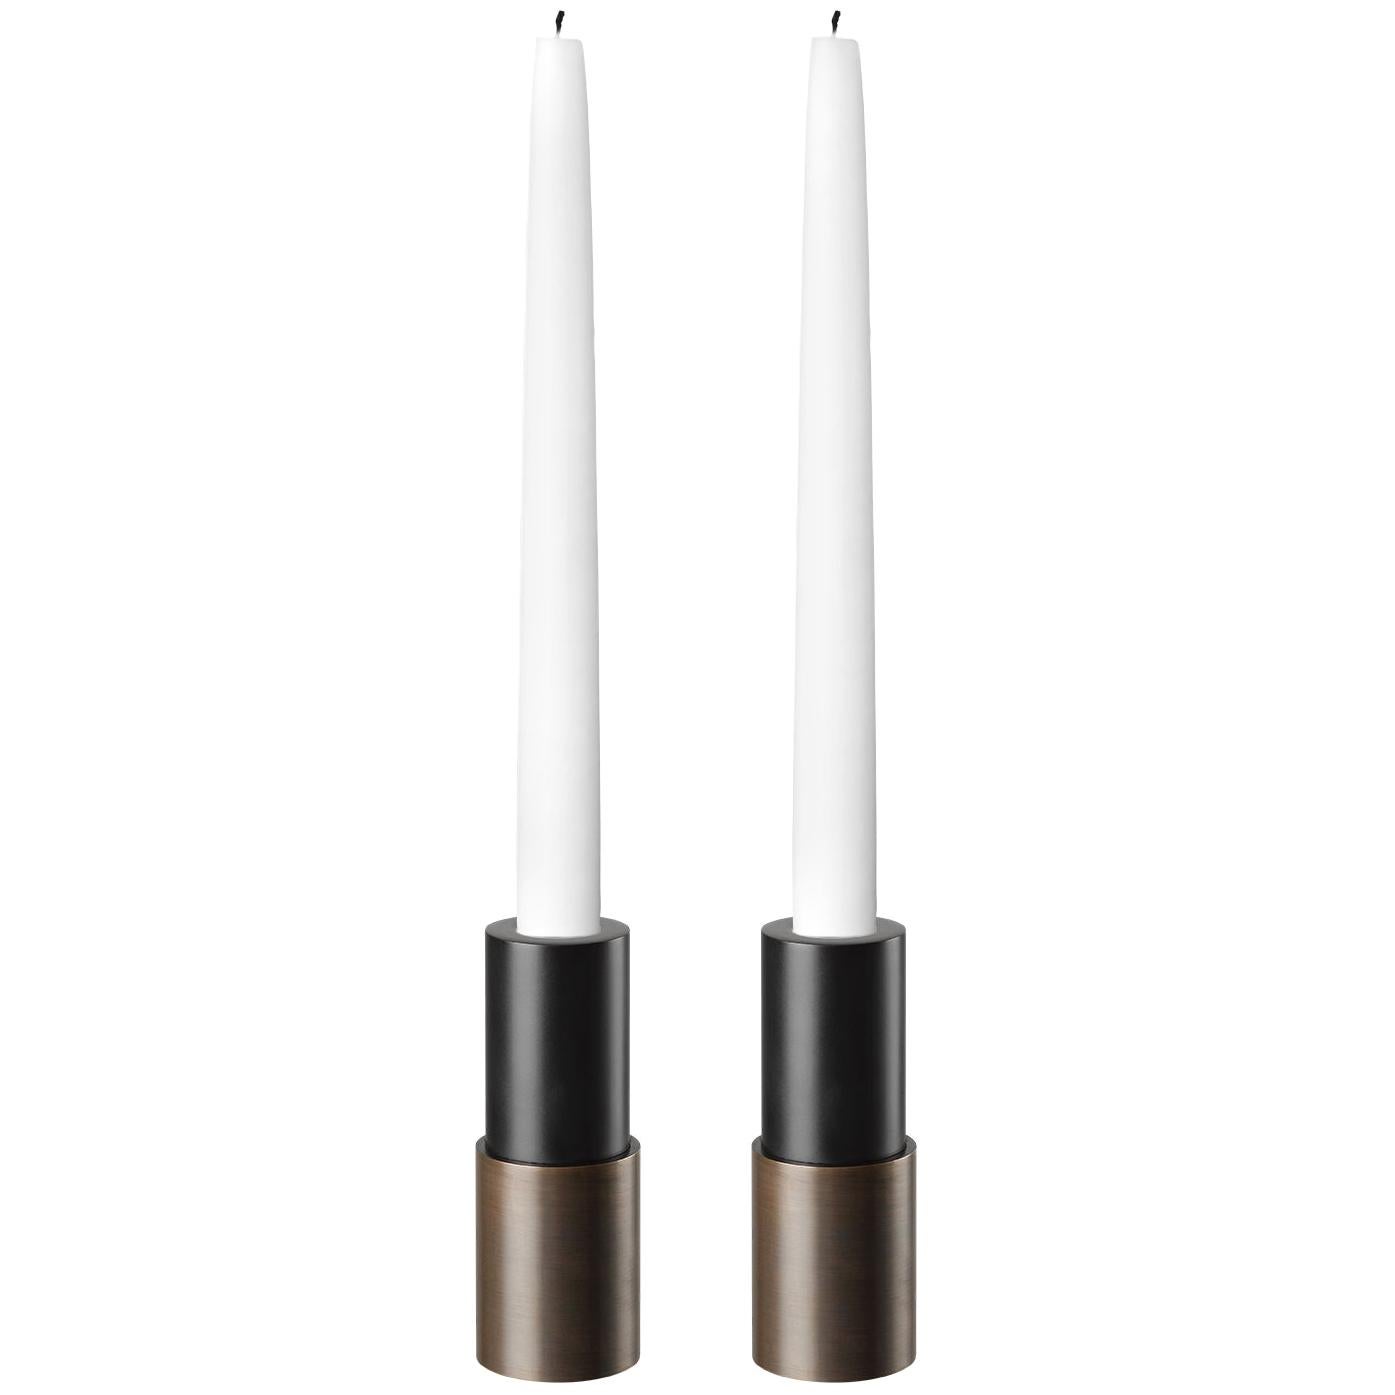 Pair of Candlesticks Model #12 by Space Copenhagen for Gubi For Sale